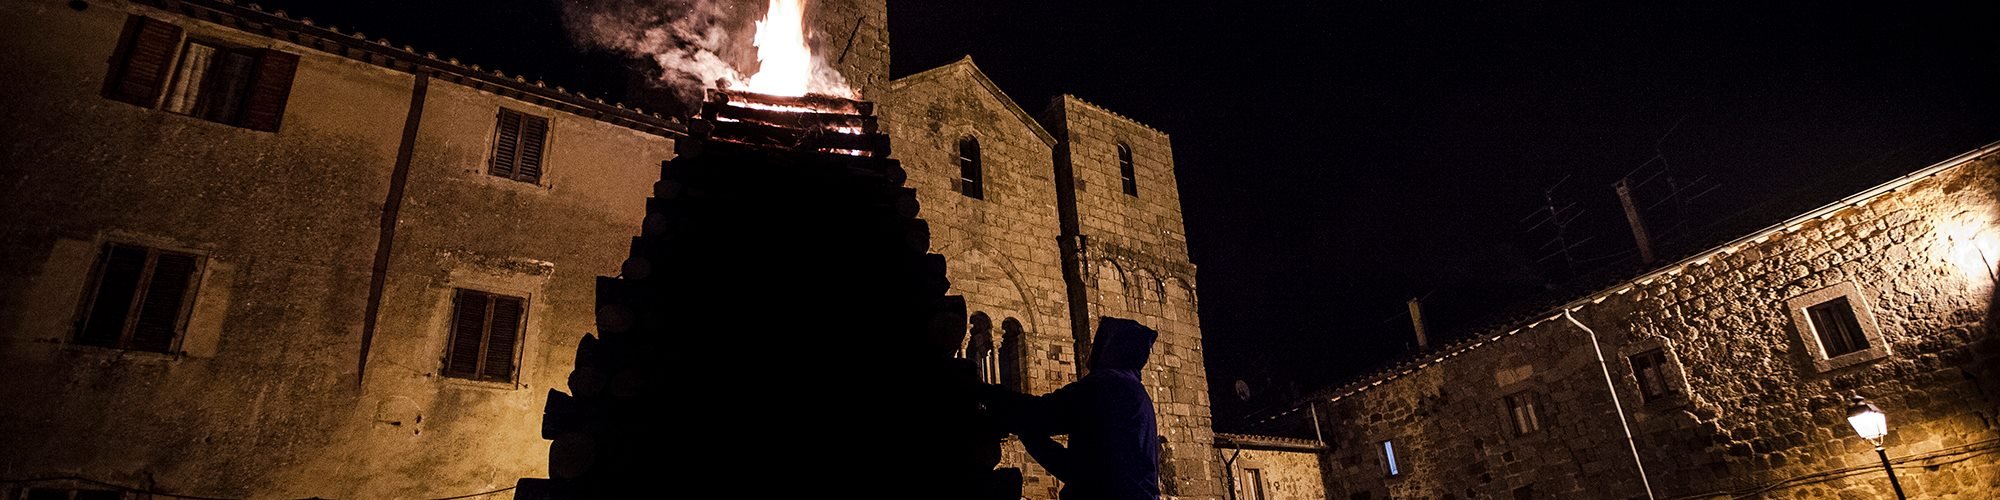 Torchlight ceremony in Abbadia San Salvatore